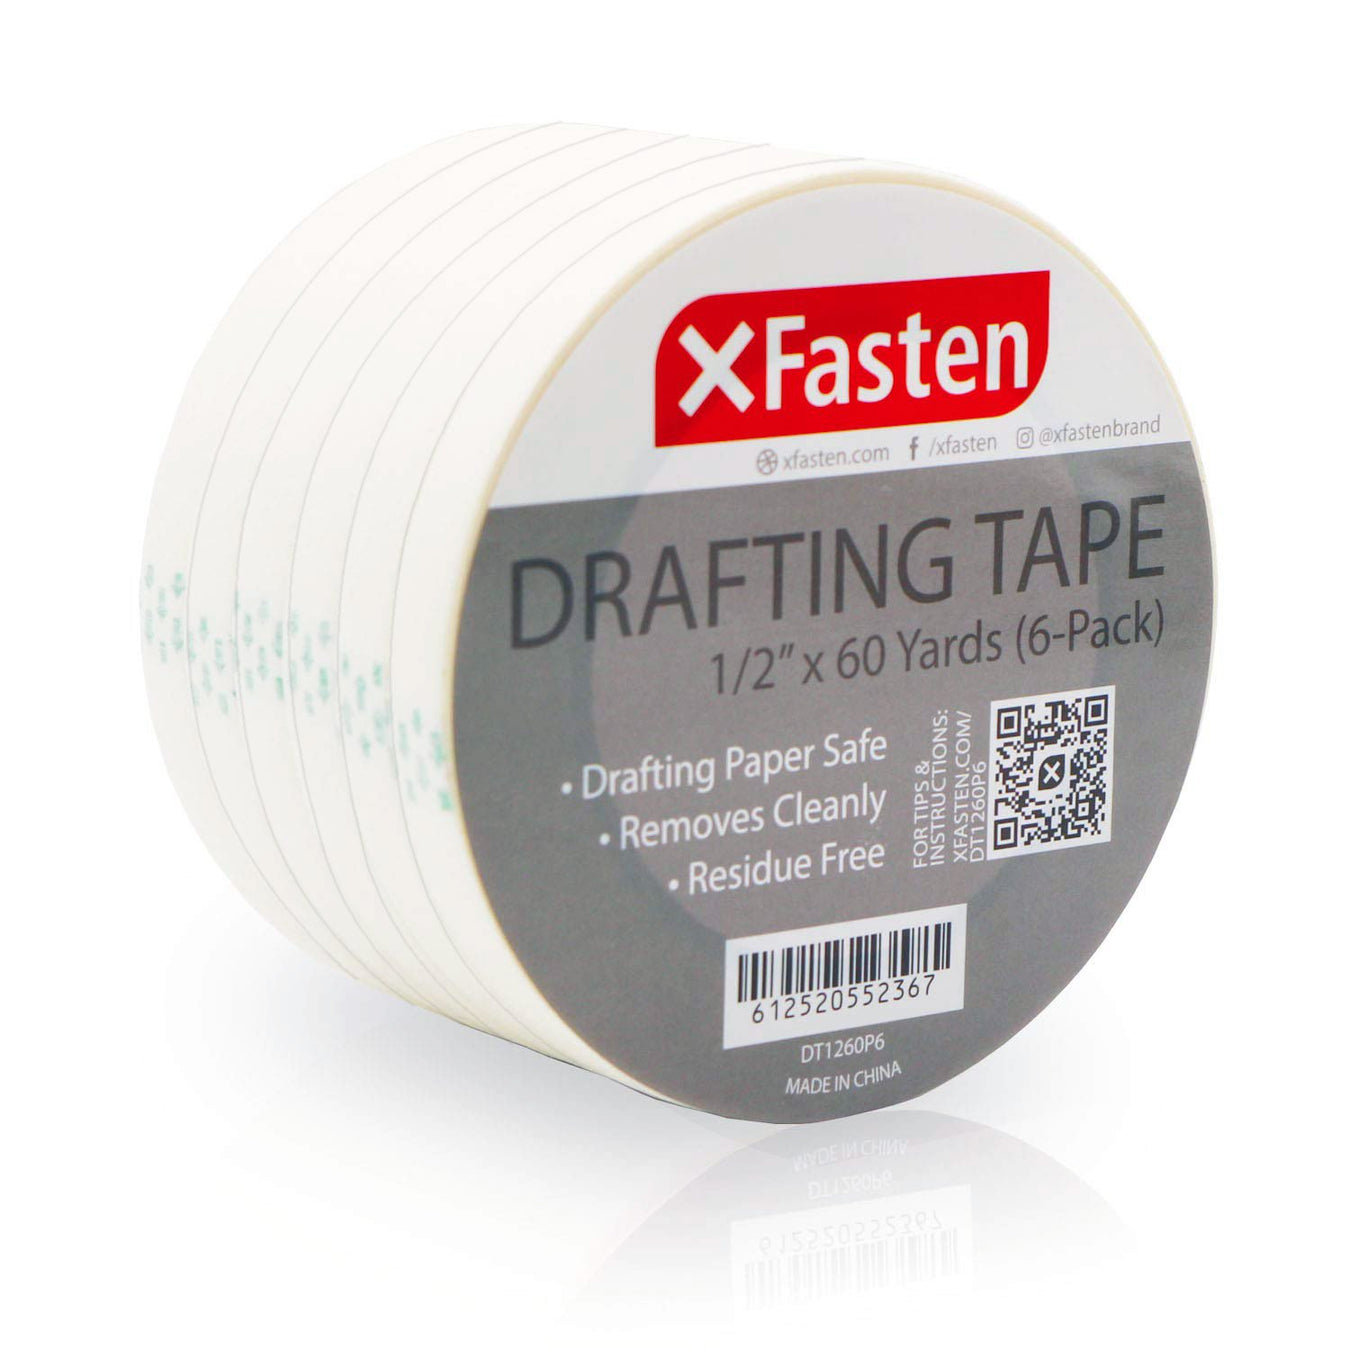 Drafting Tape - XFasten